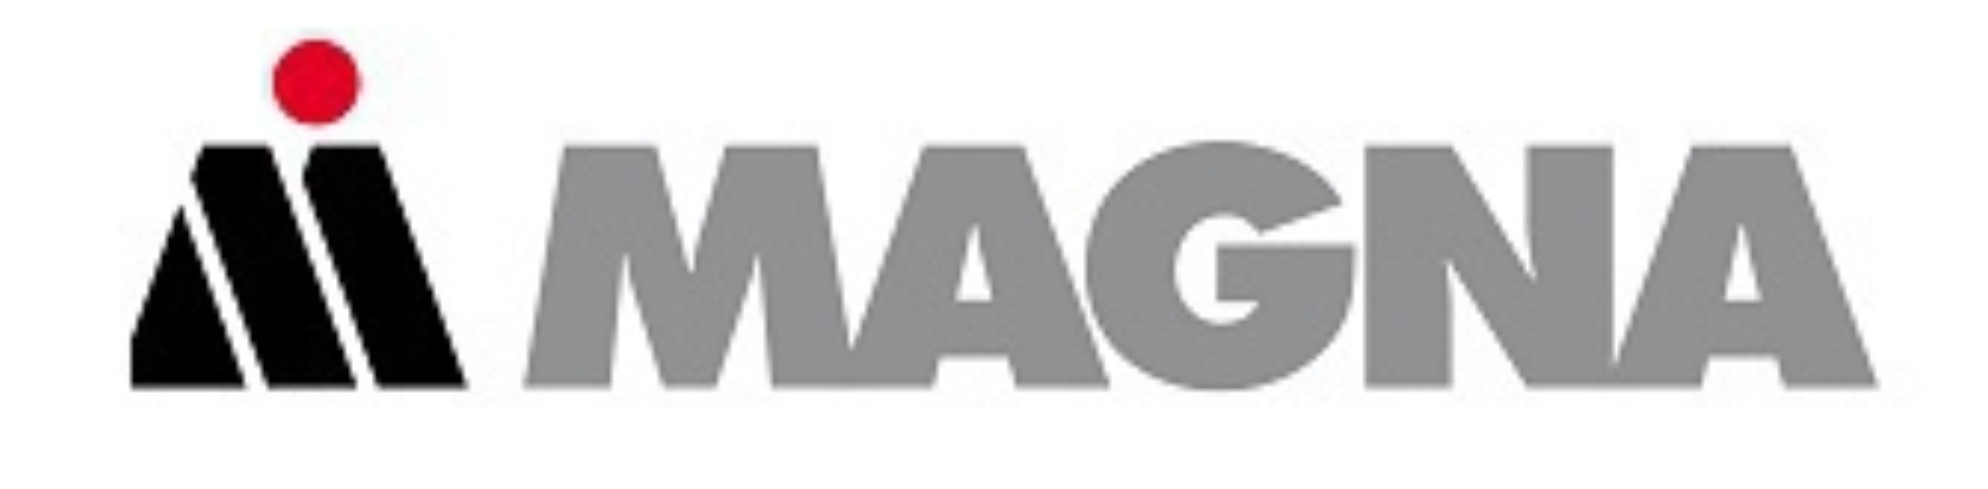 magna.jpg (50 KB)